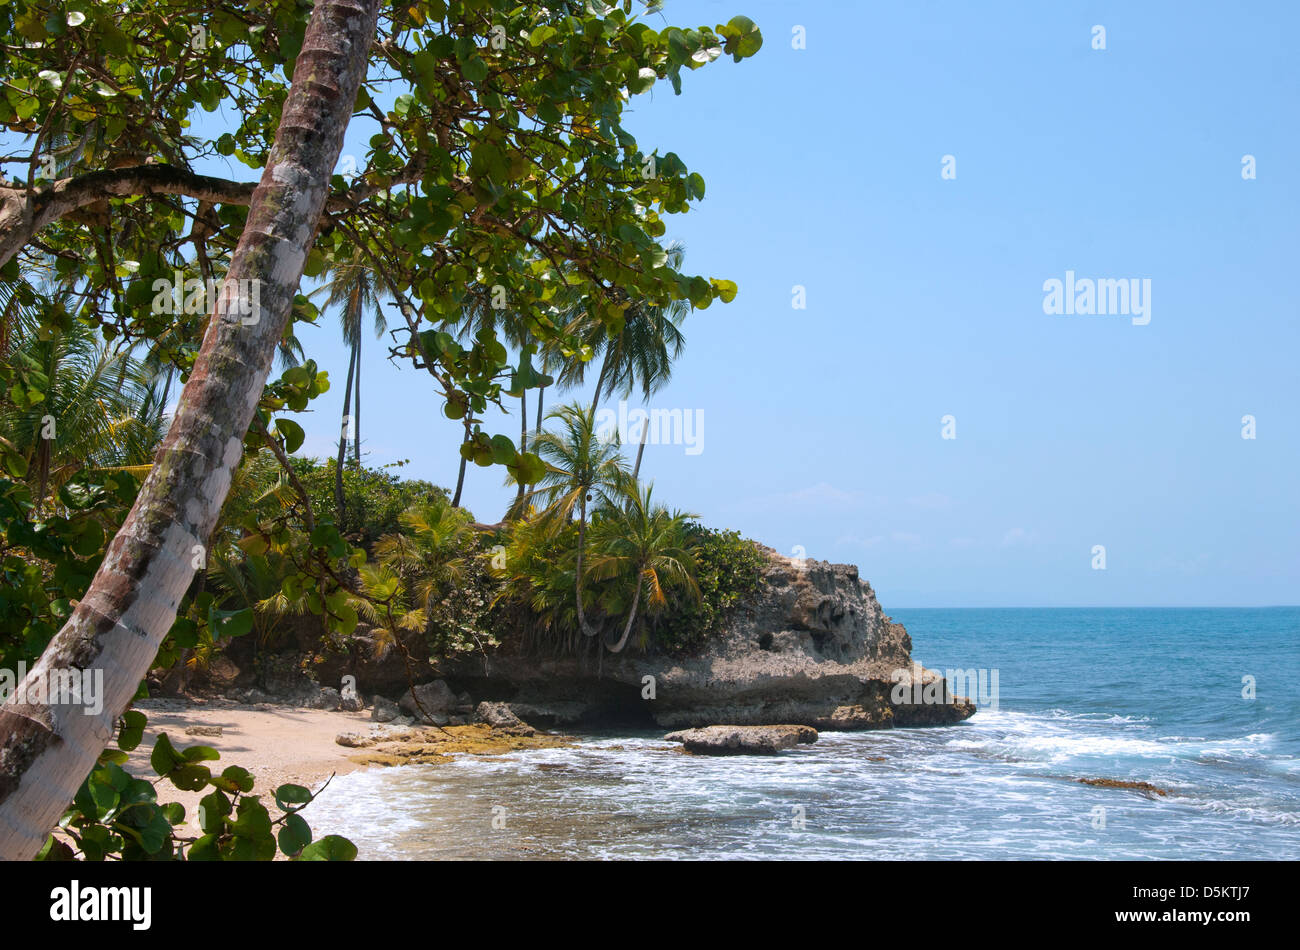 The beach in Costa Rica, with jungle reaching beach, Playa Manzanillo. Central America. Stock Photo